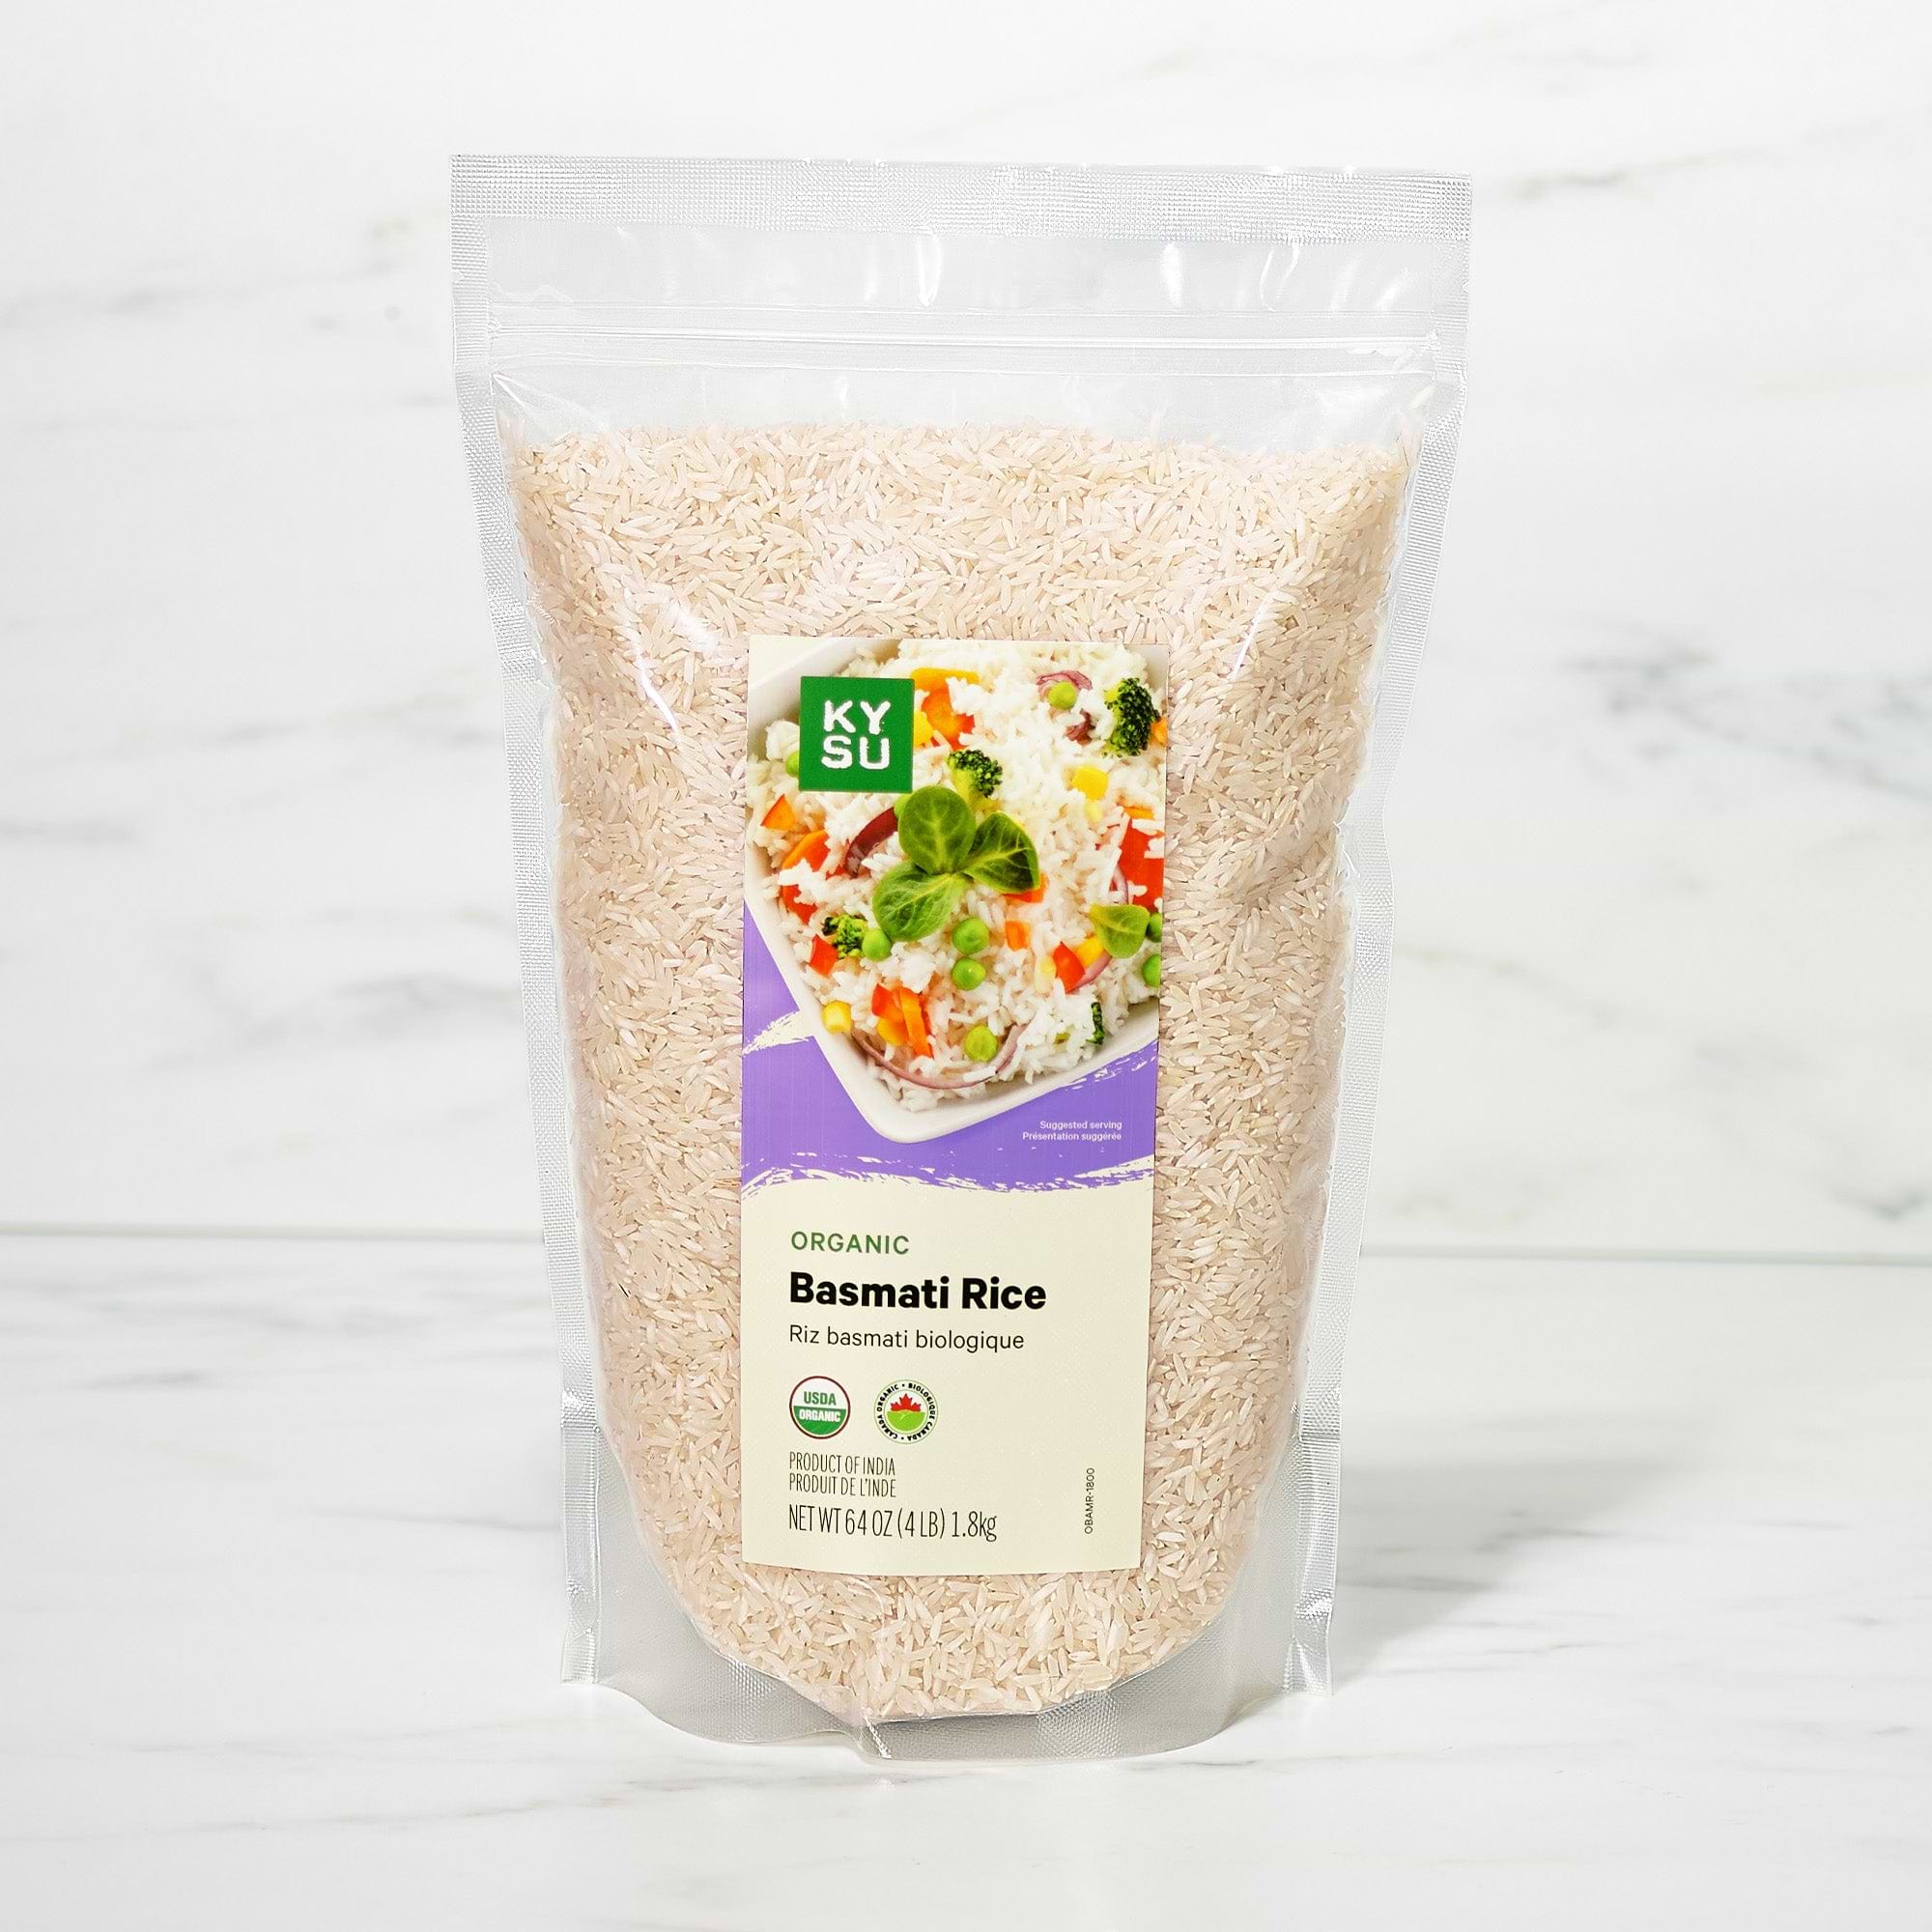 Organic Basmati Rice, 1.8kg